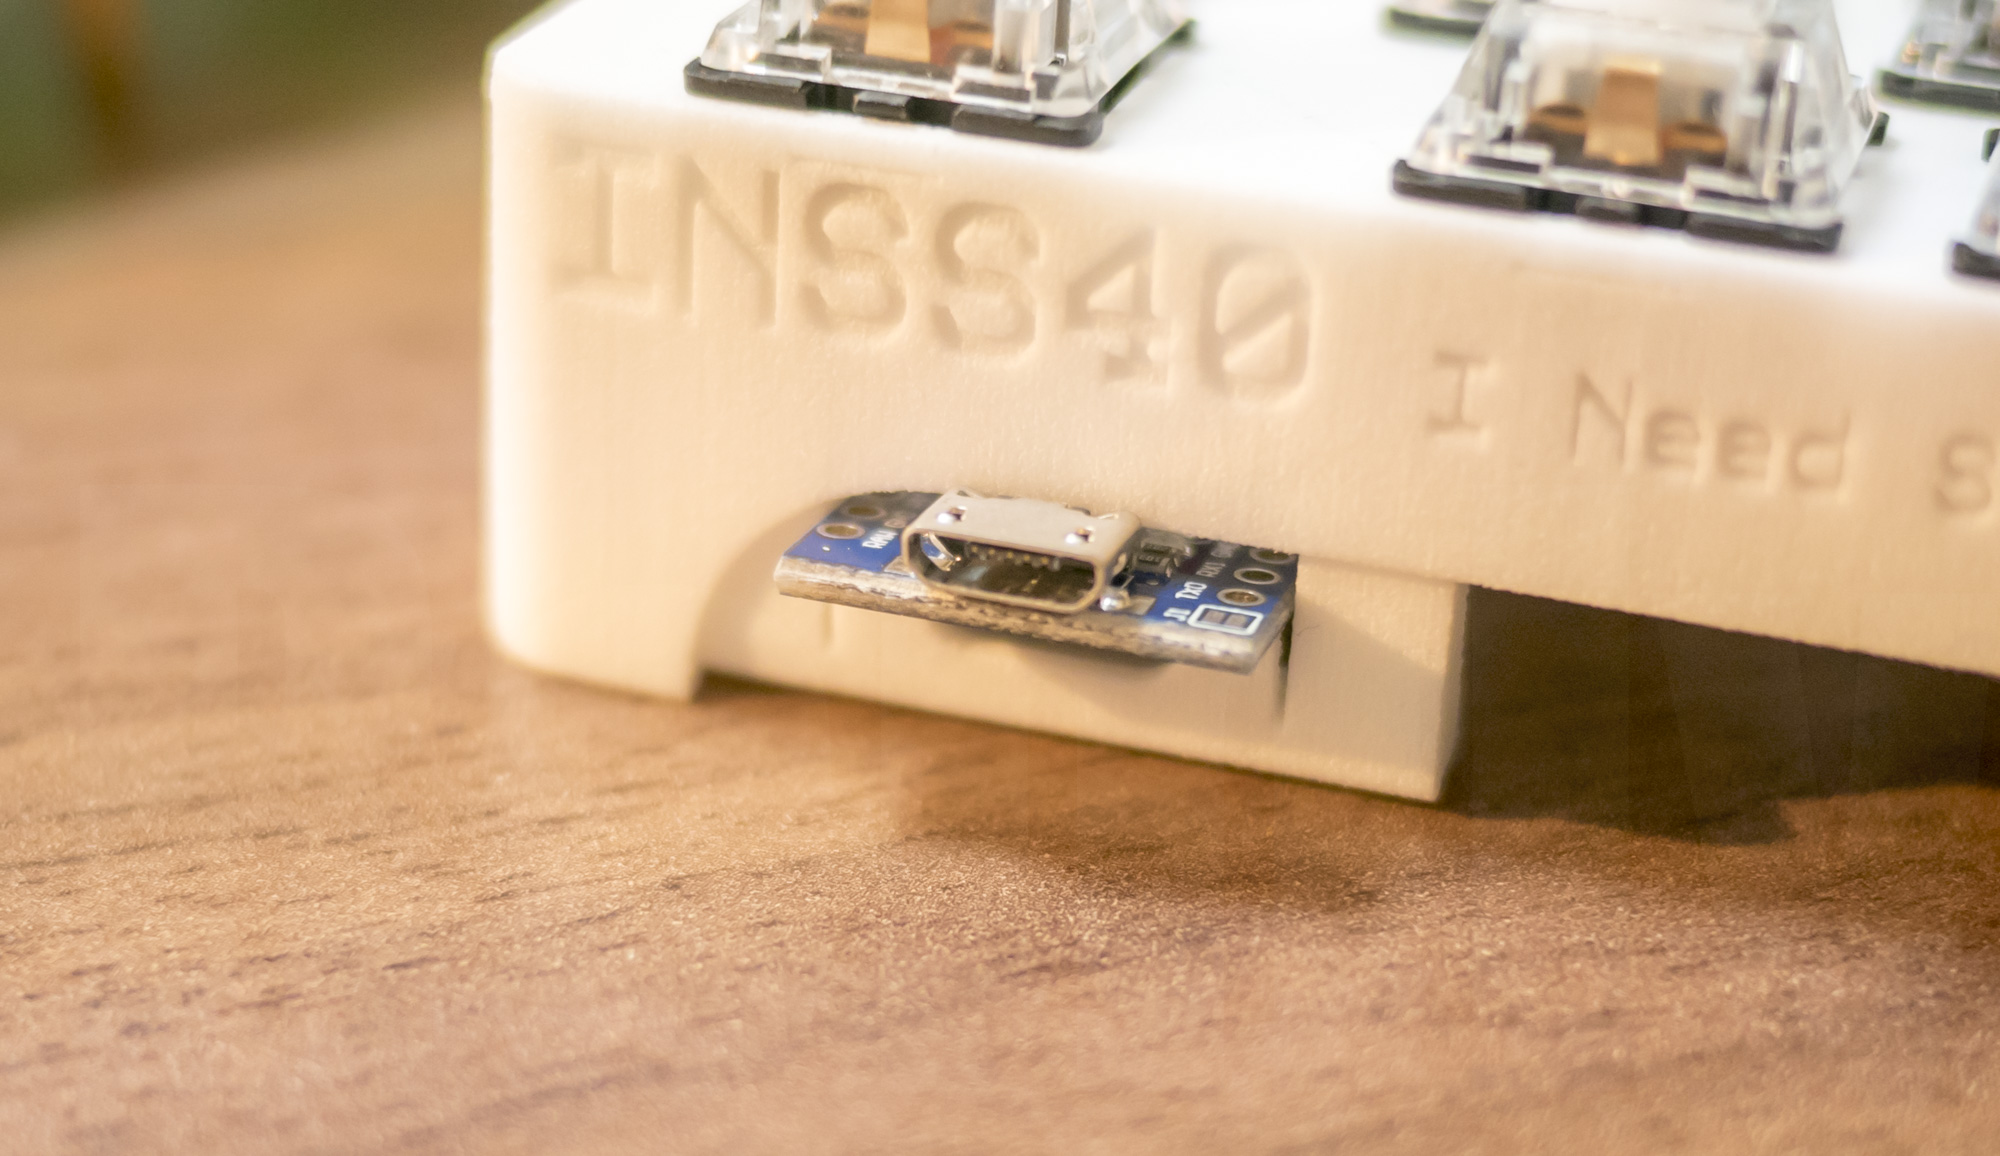 INSS40 3D print Pro Micro holder failure